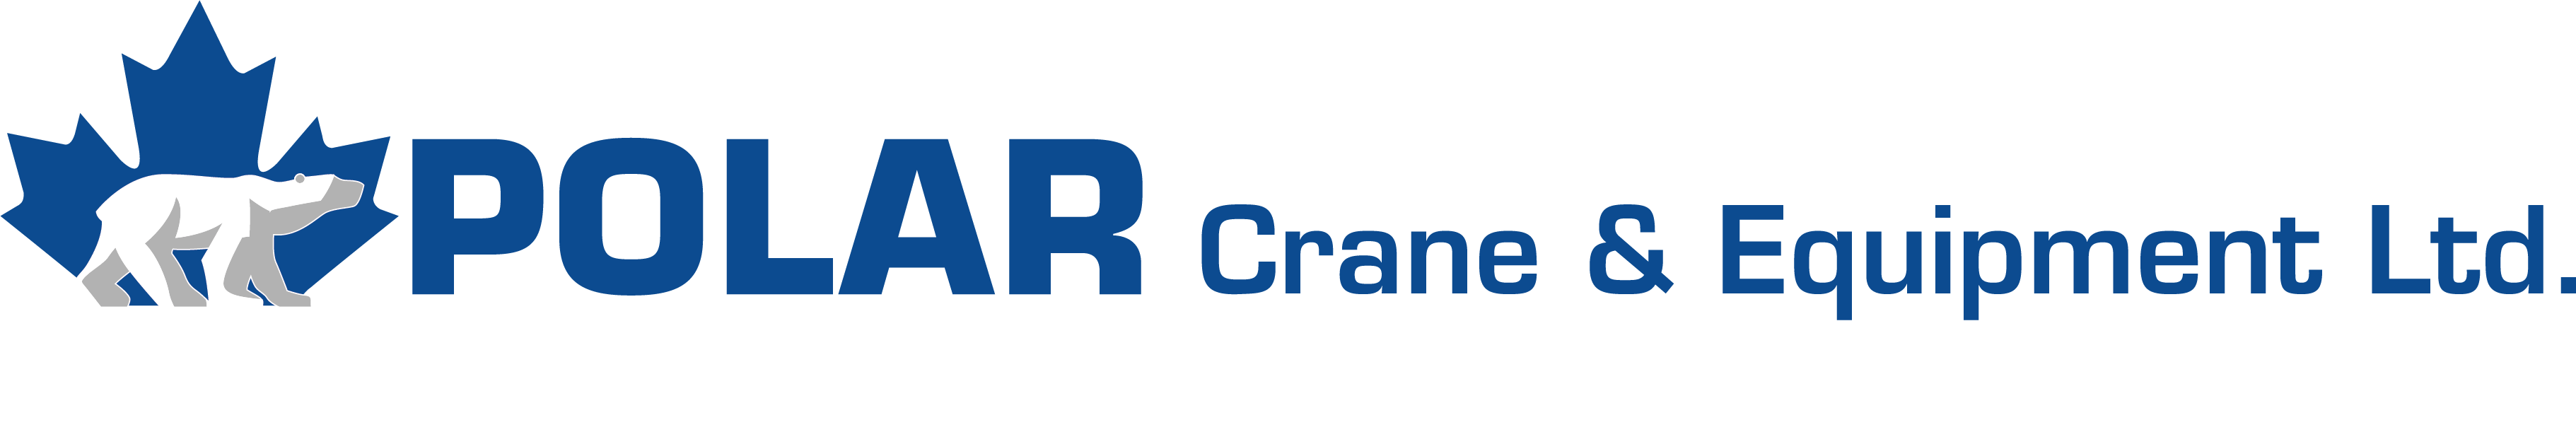 Polar Crane & Equipment Ltd.